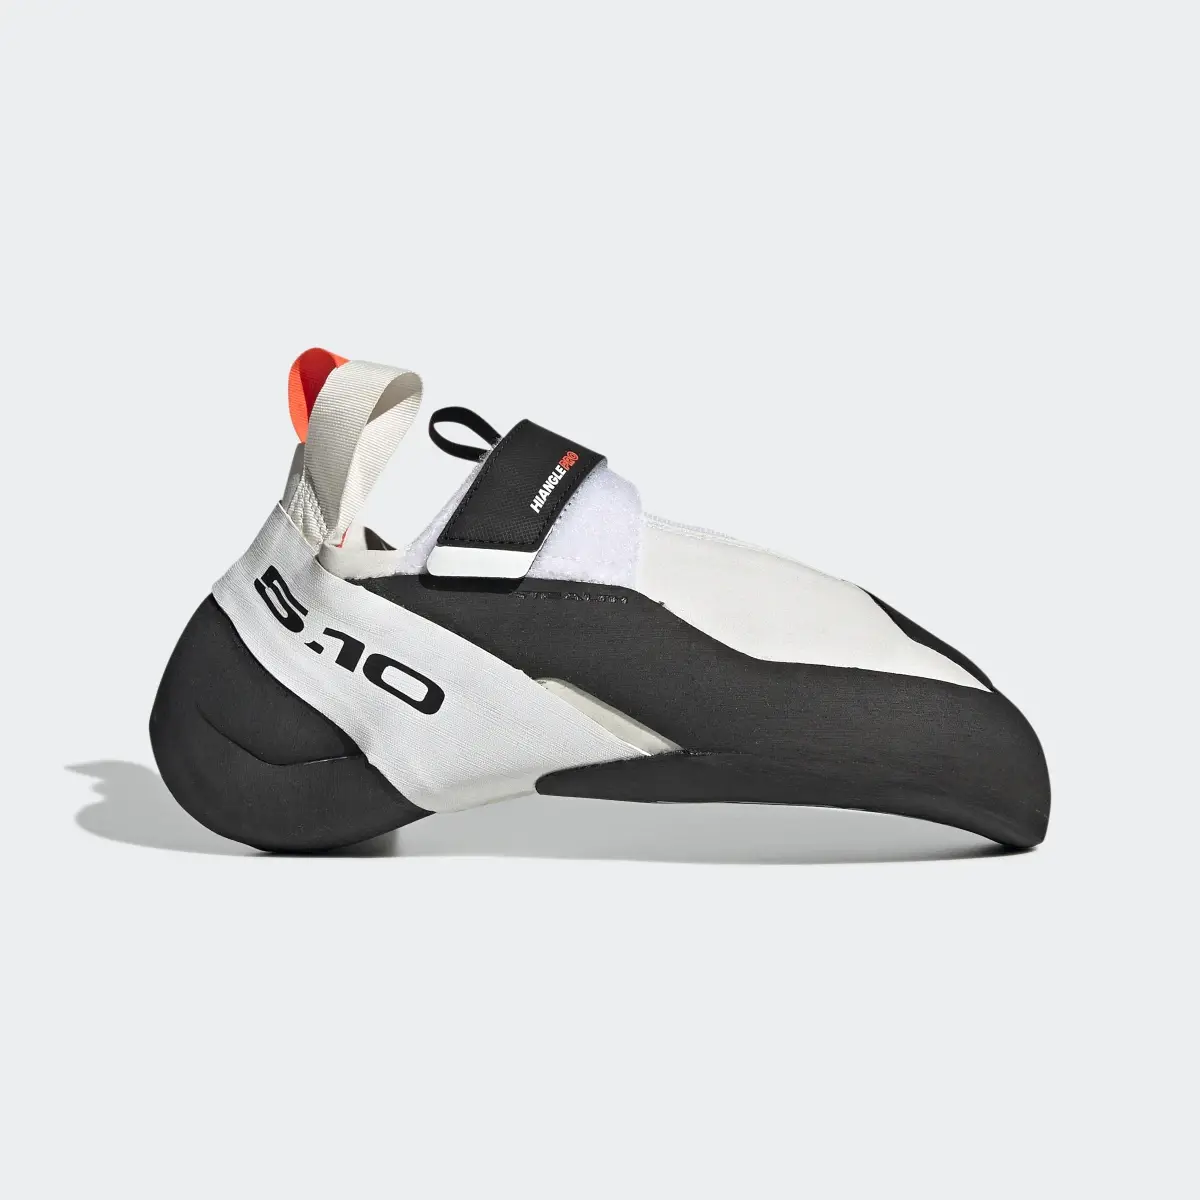 Adidas Pés de Gato Tokyo Competition Hiangle Pro Five Ten. 2